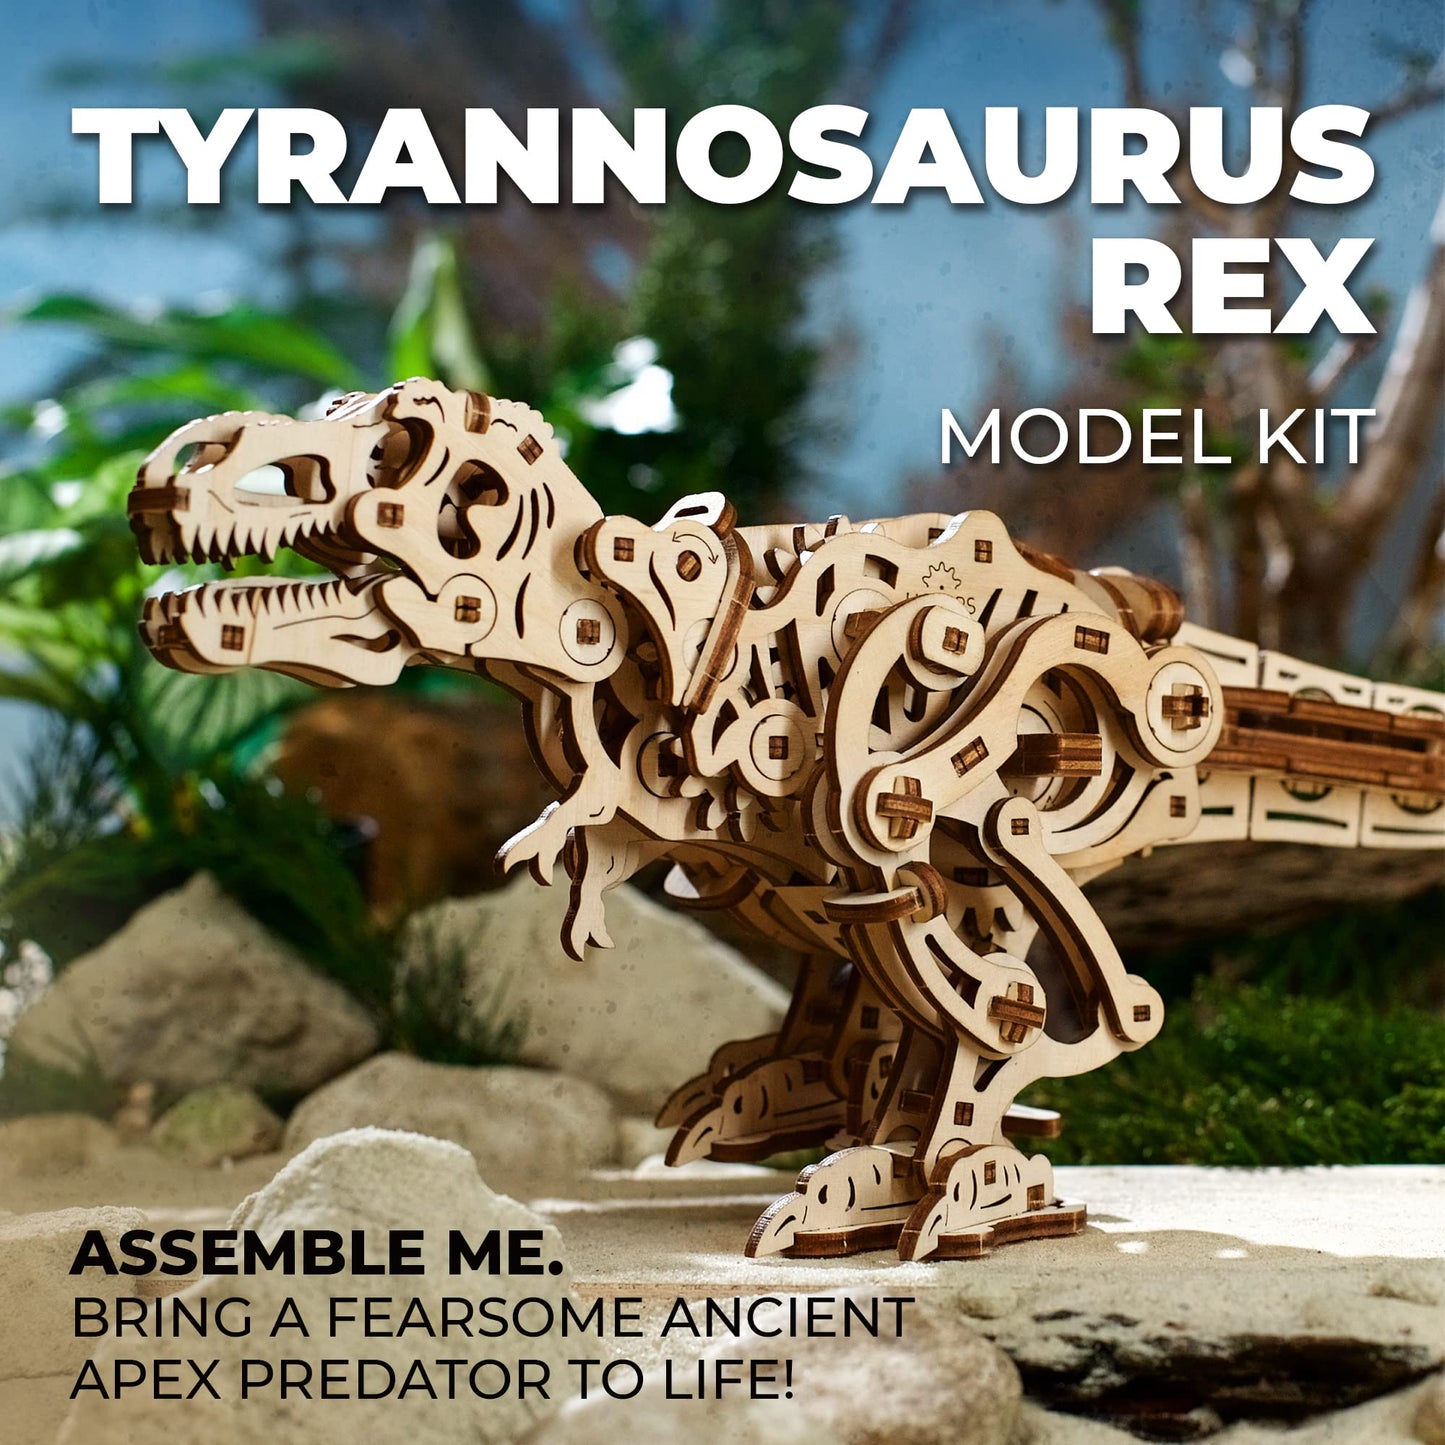 UGEARS Tyrannosaurus Rex 3D Mechanical Model Puzzle DIY Kits